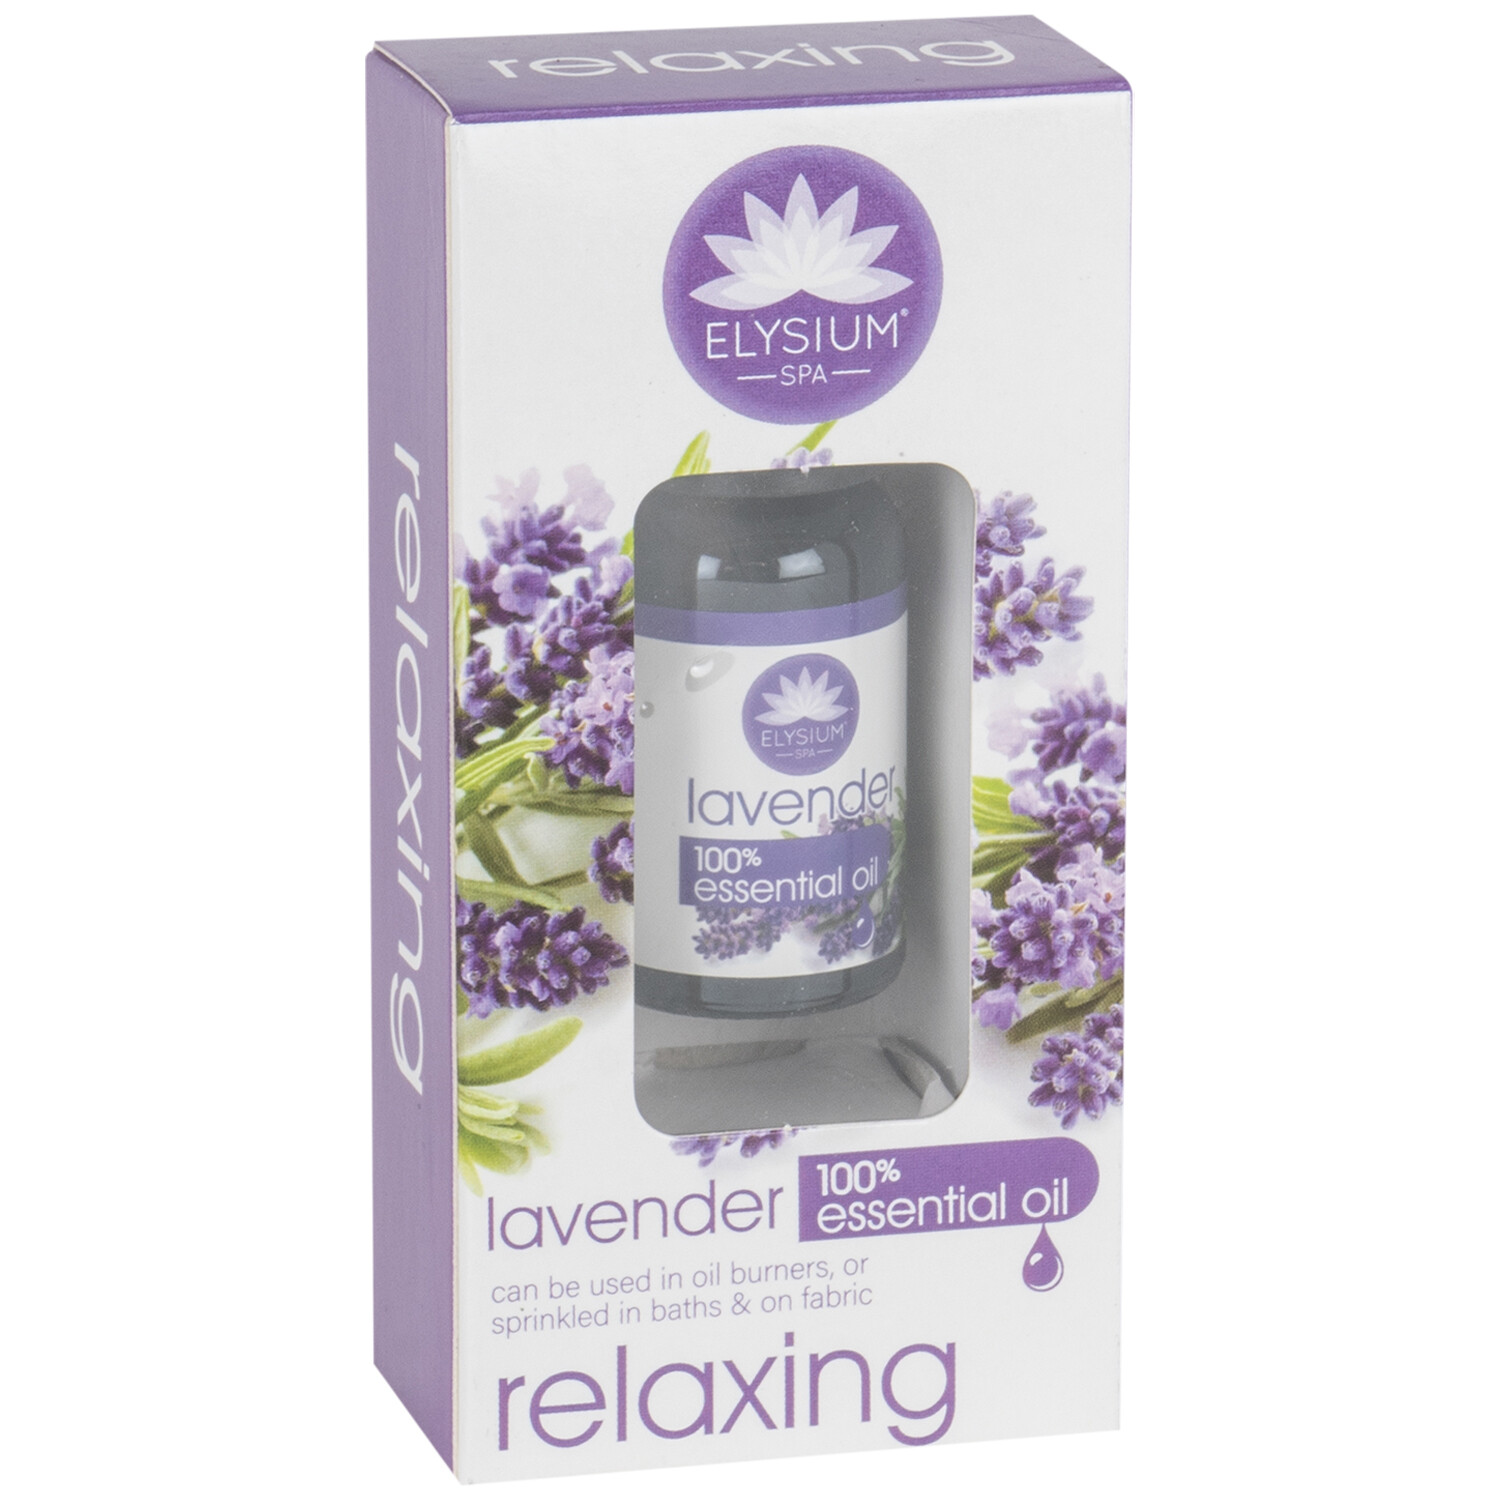 Elysium Spa Relaxing Lavender Essential Oil Image